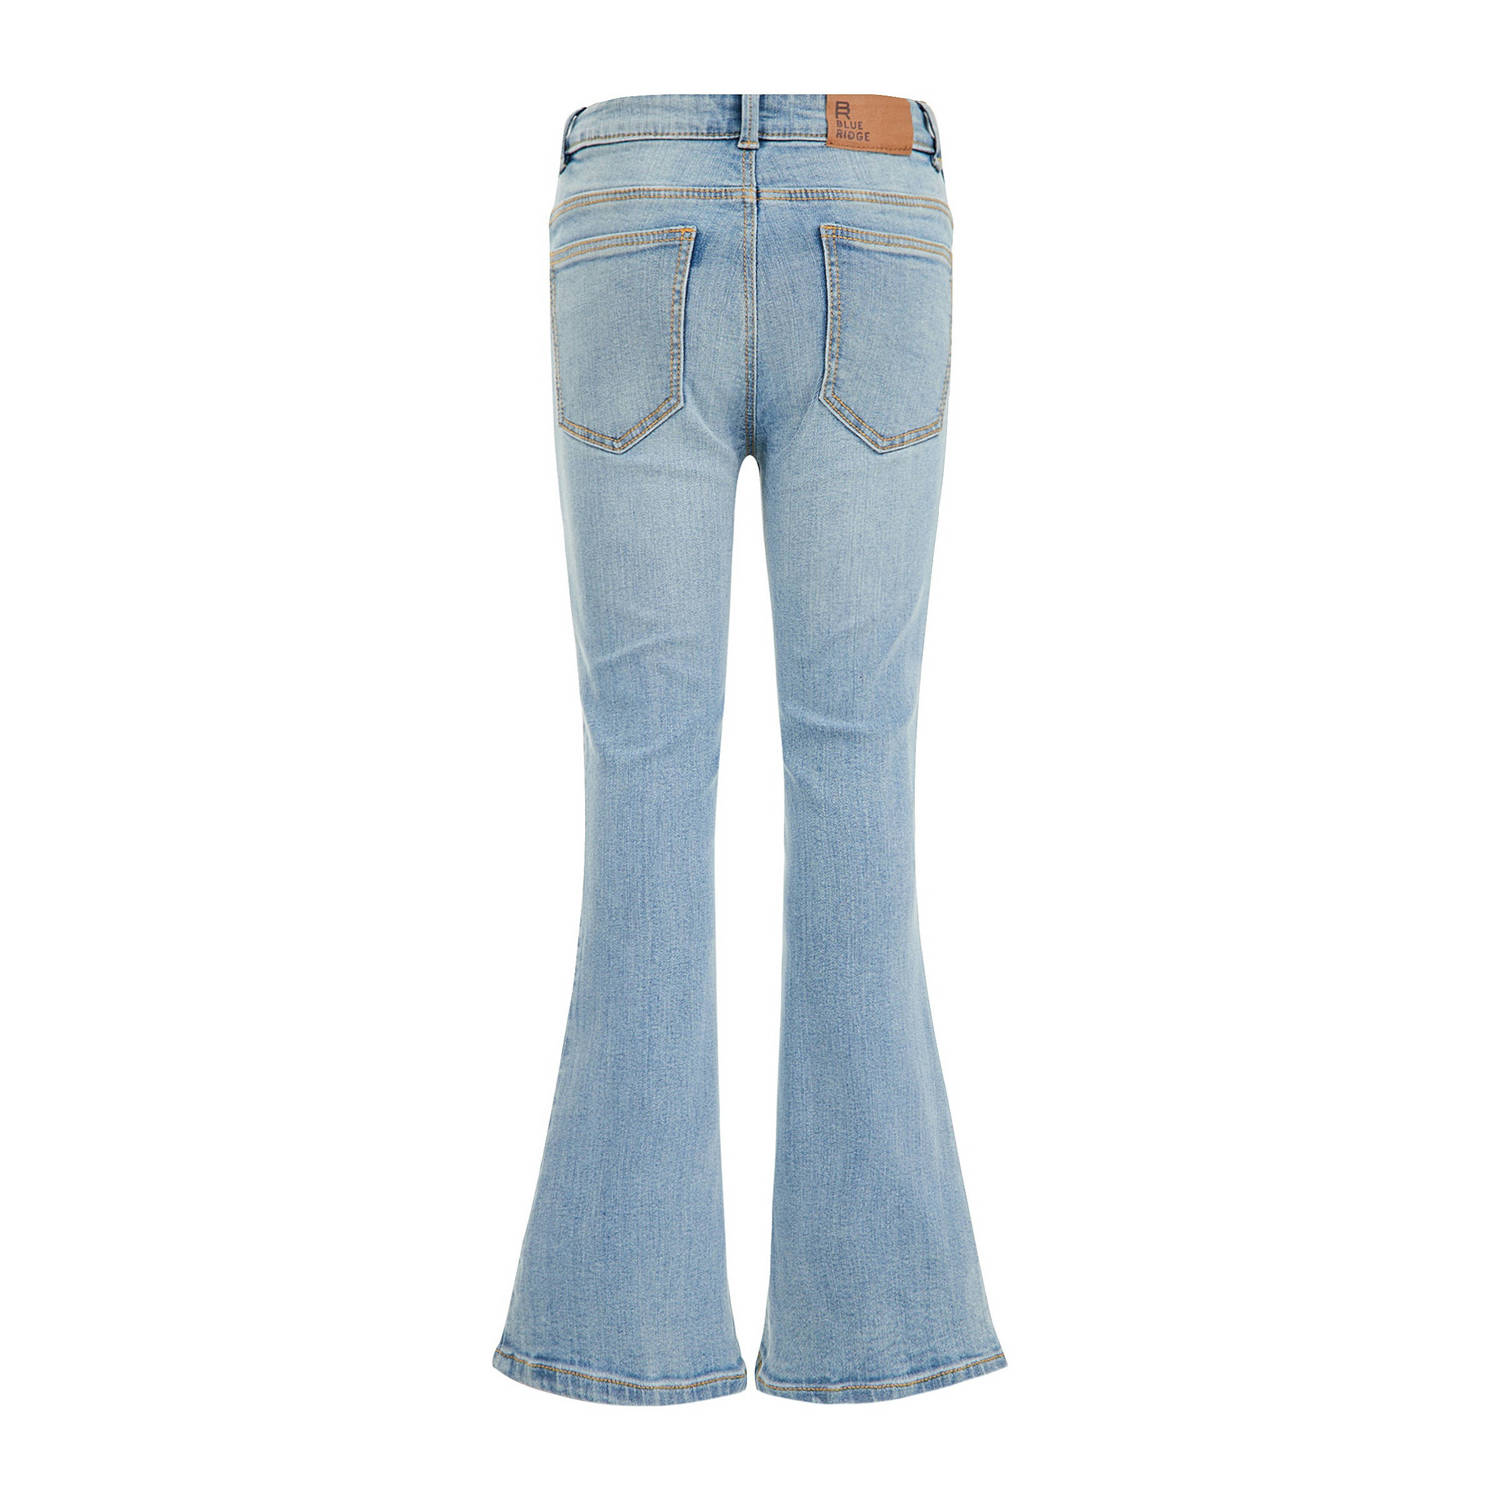 WE Fashion Blue Ridge flared jeans blue used denim